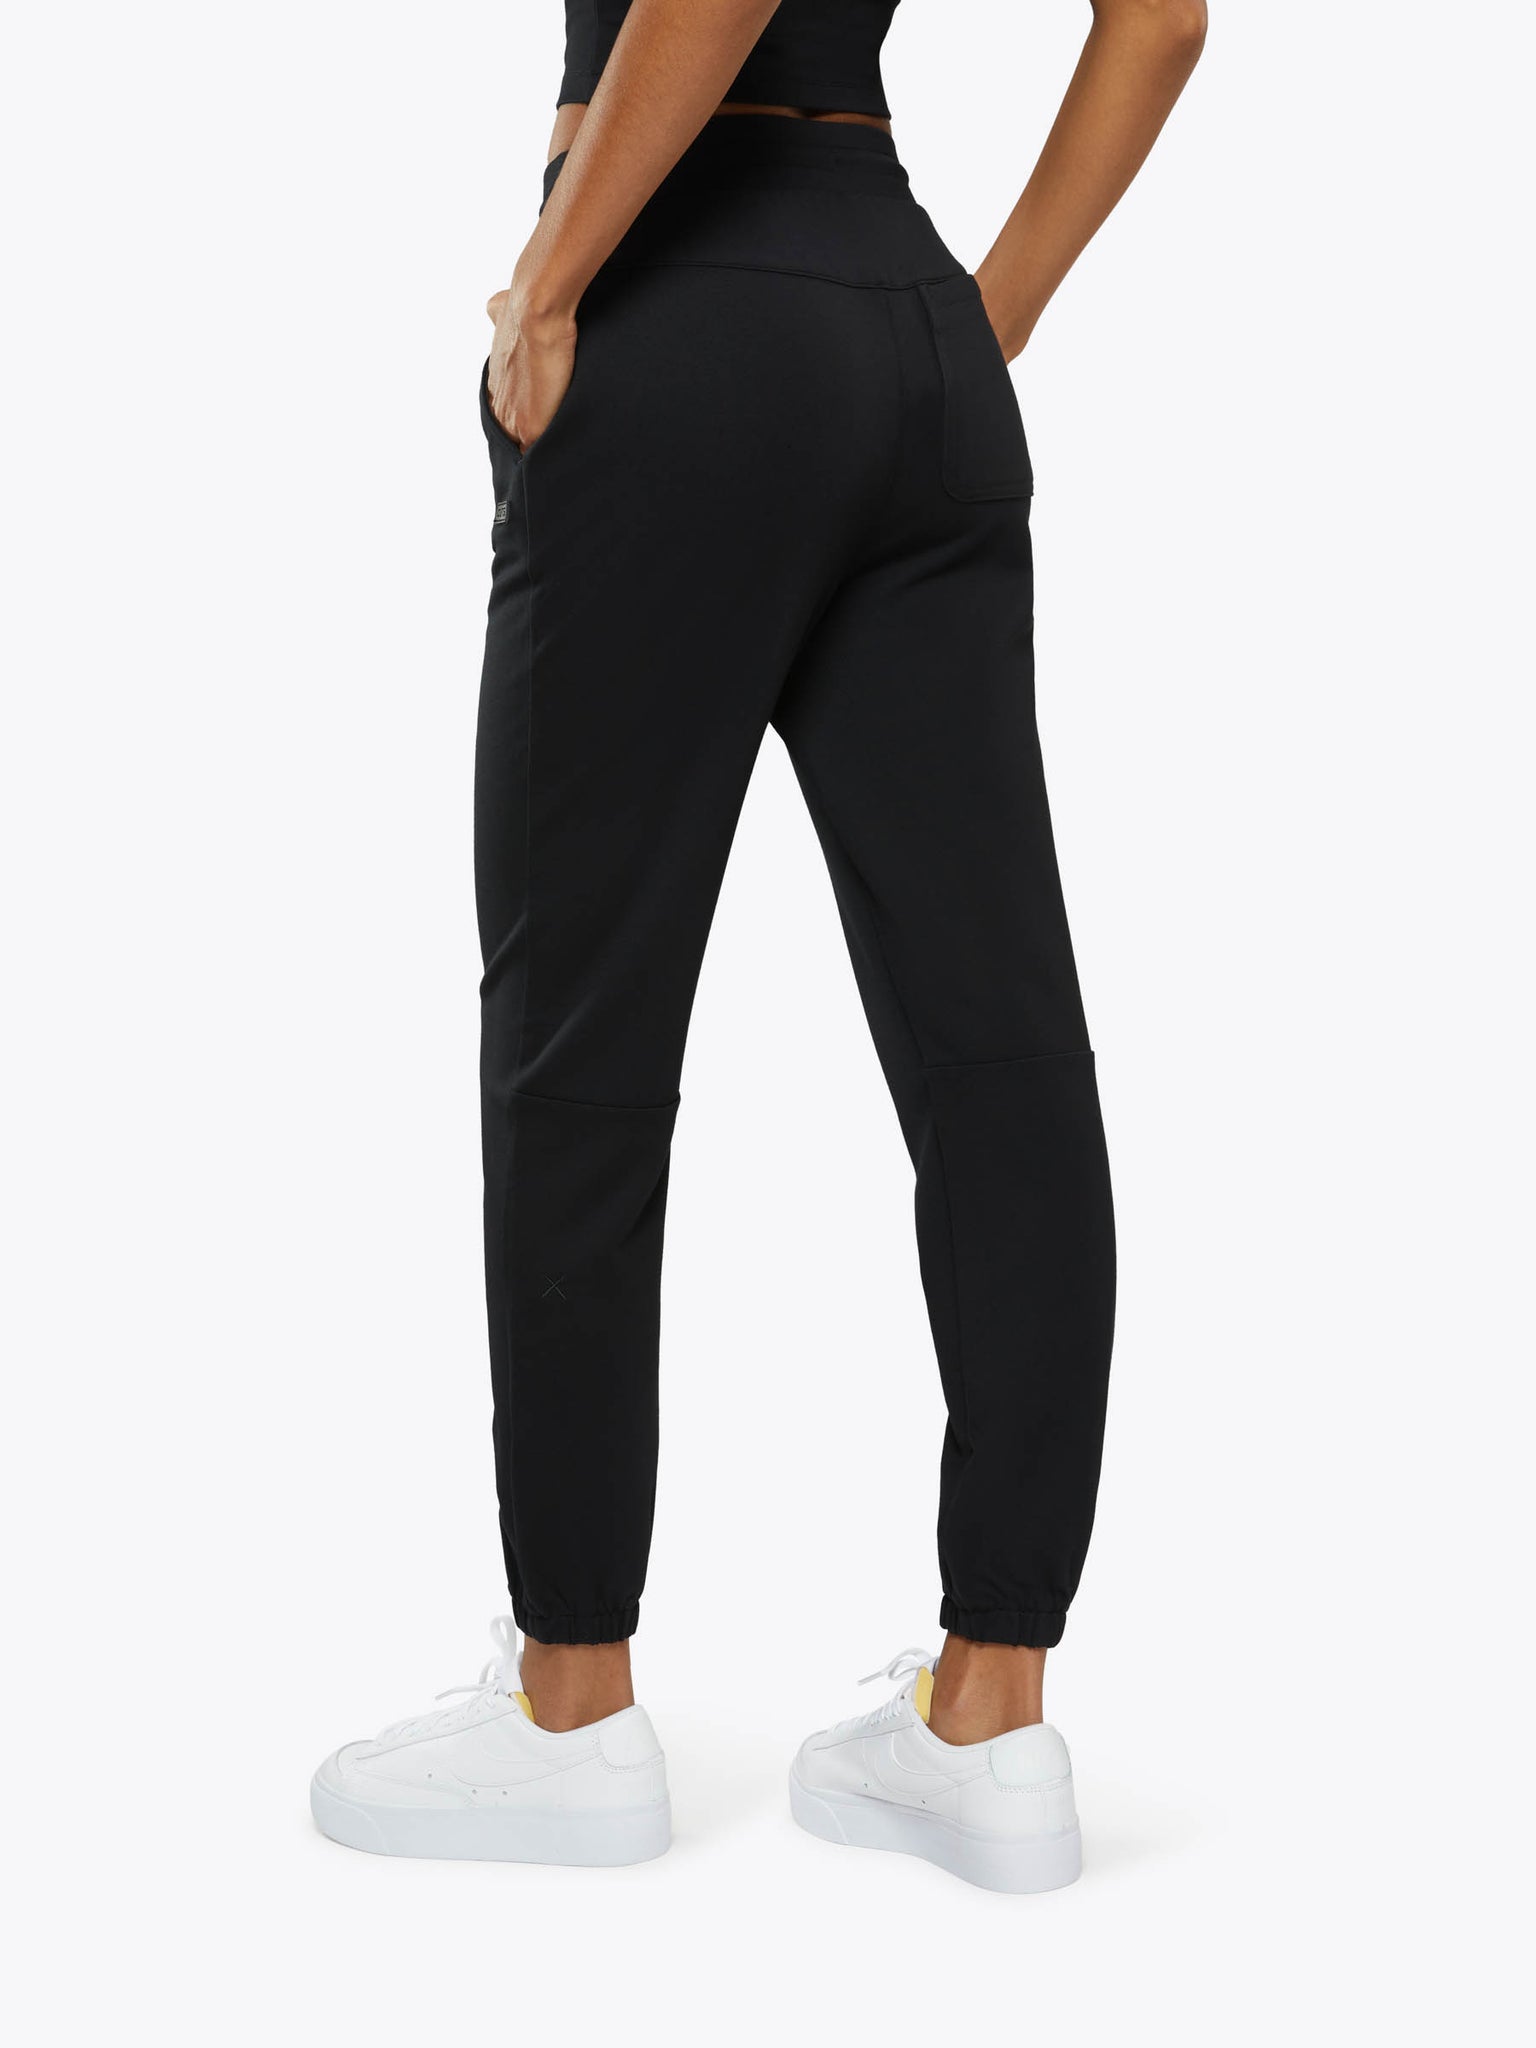 Nike Women's Sportswear Tech Pack Cropped Pants, Black, XS 